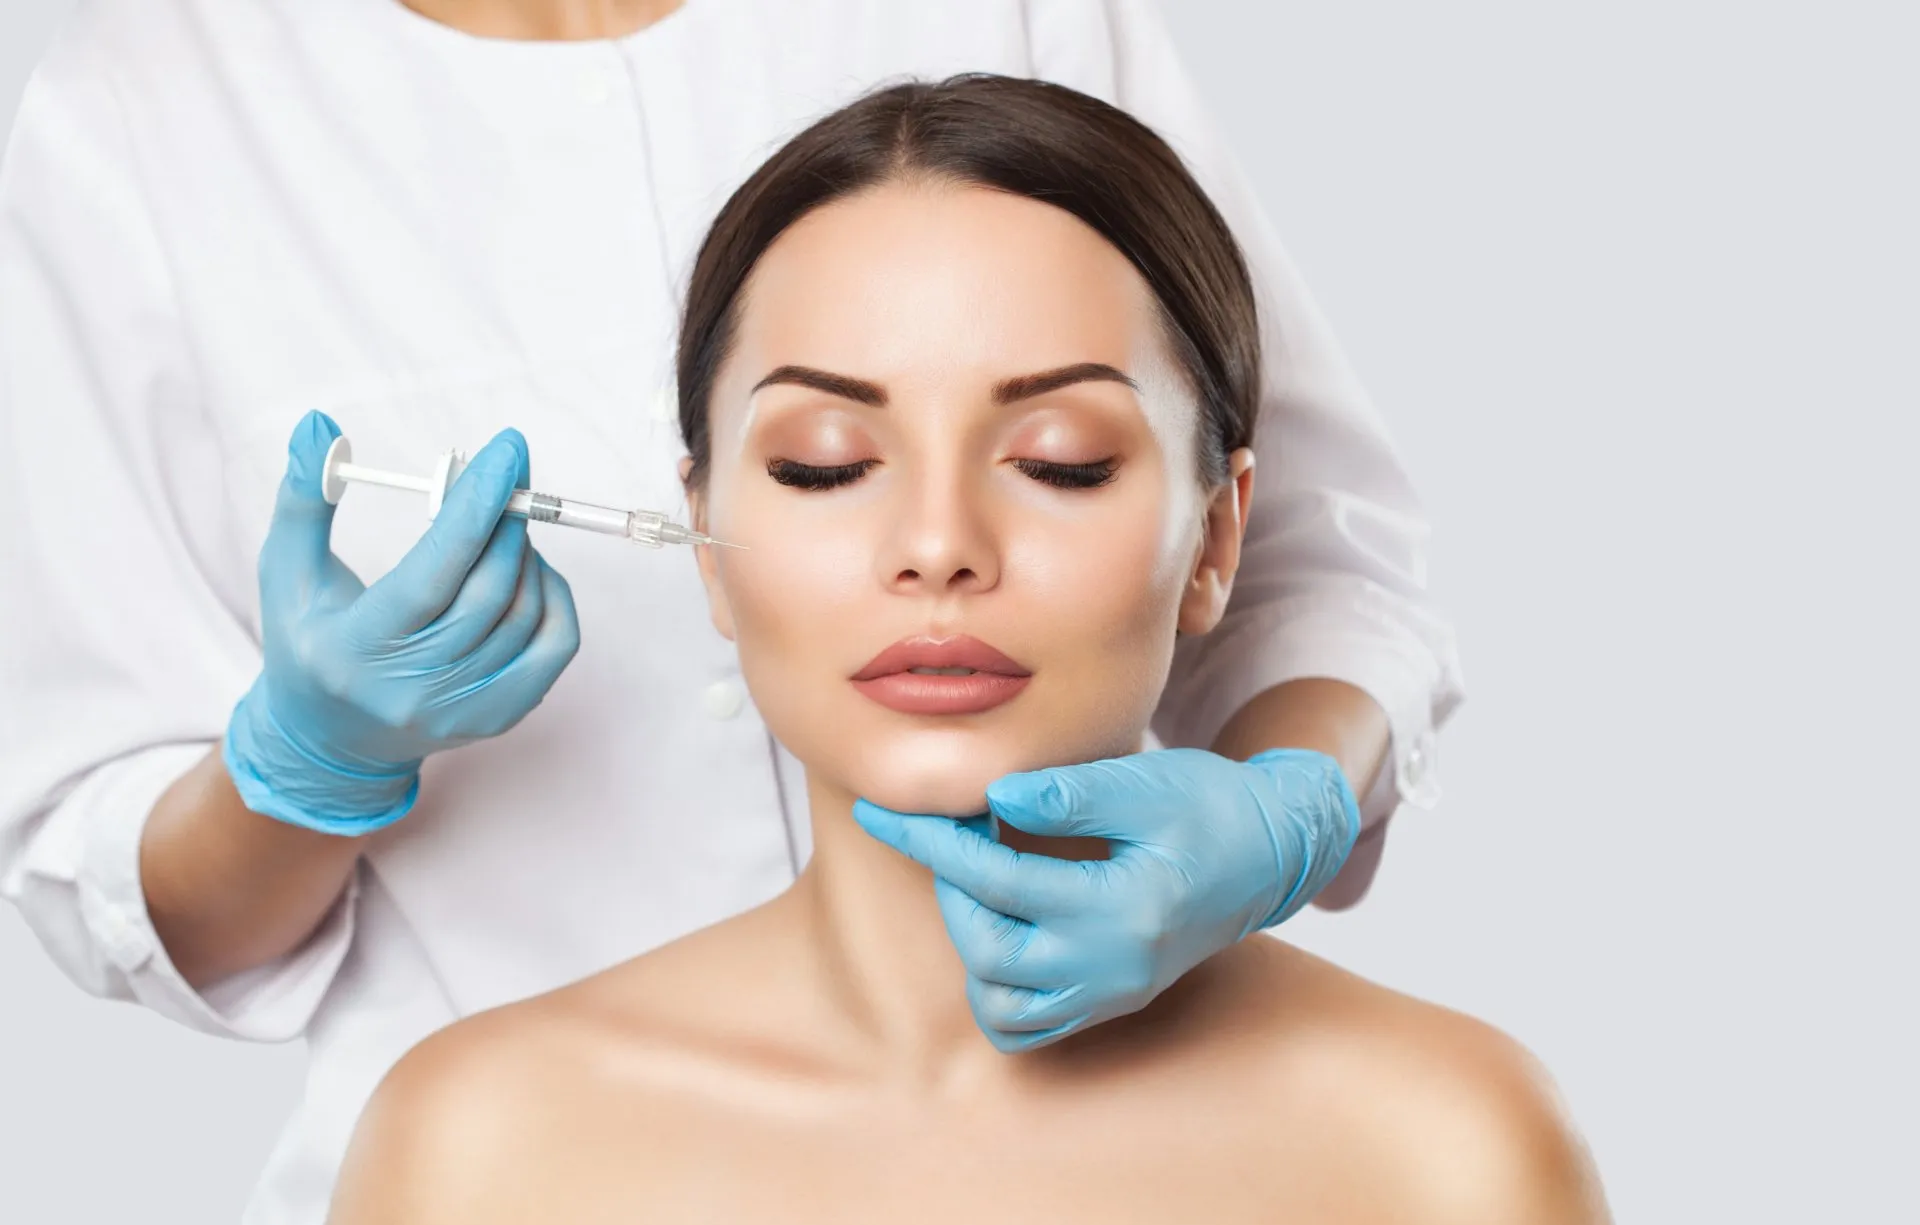 Woman receiving facial rejuvenation Platelet Rich Plasma (PRP) - Skinworks Wellness & Aesthetics - Hendersonville, TN